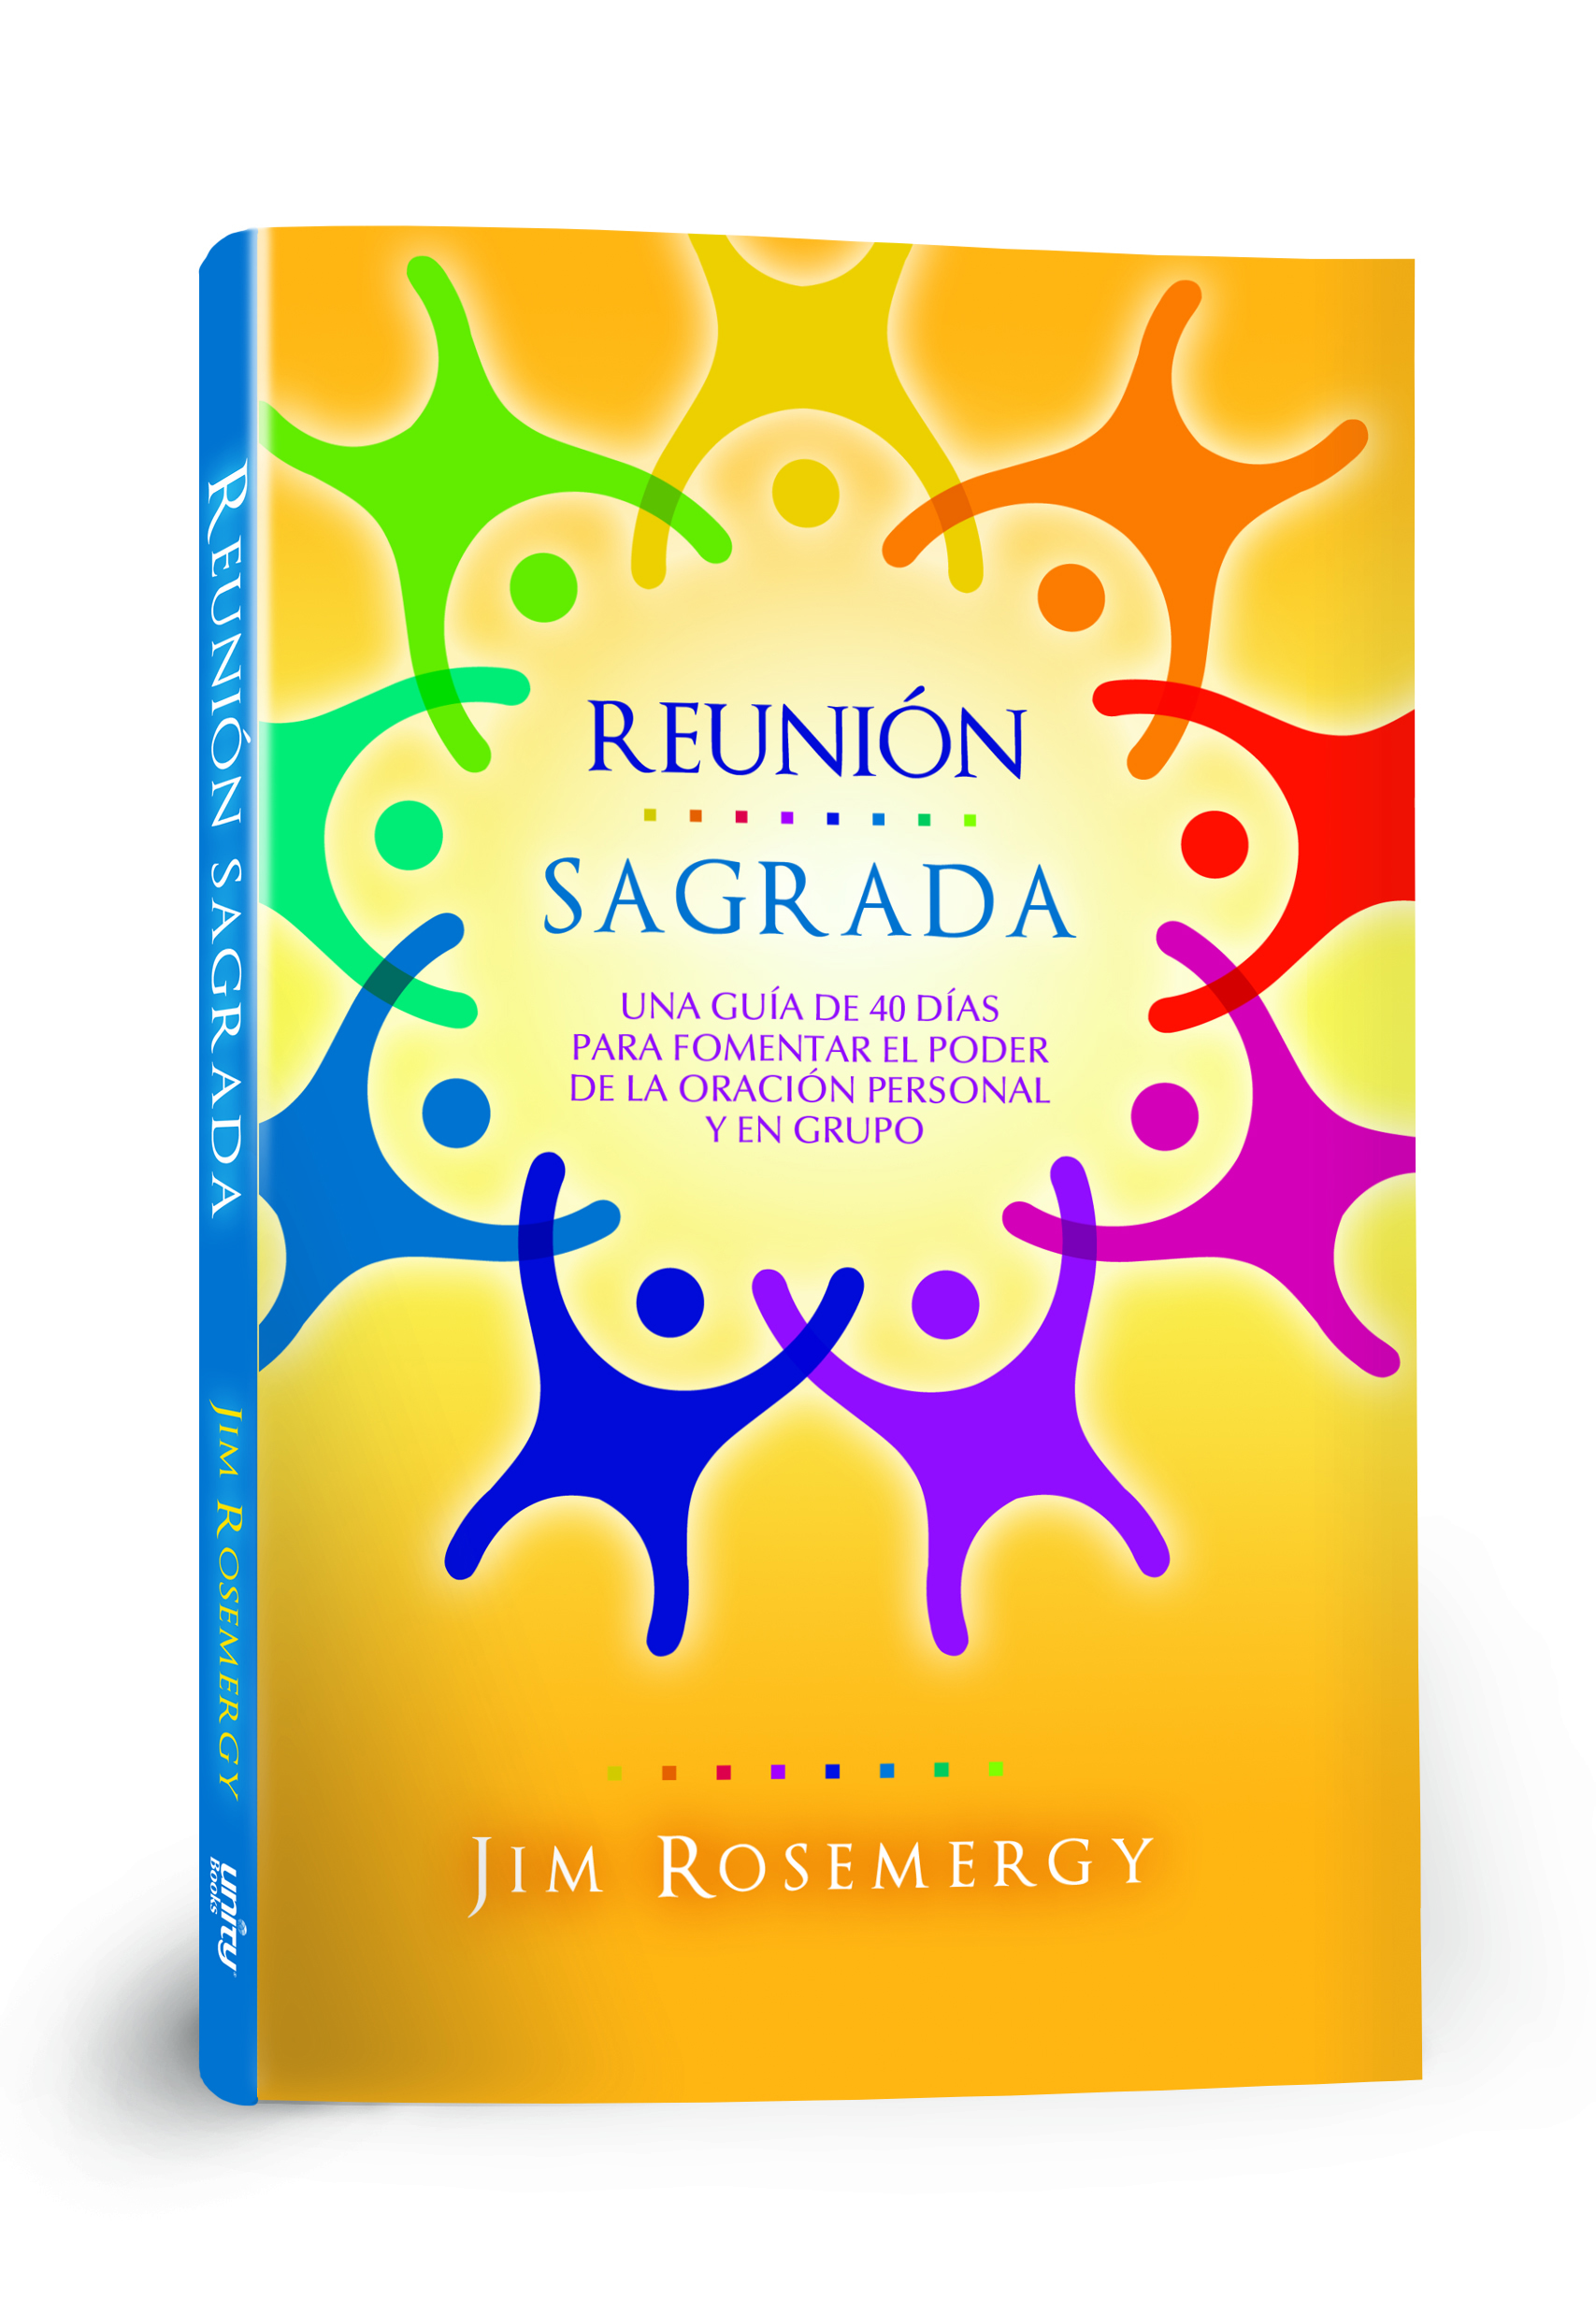 Reunion sagrada - Libro digital